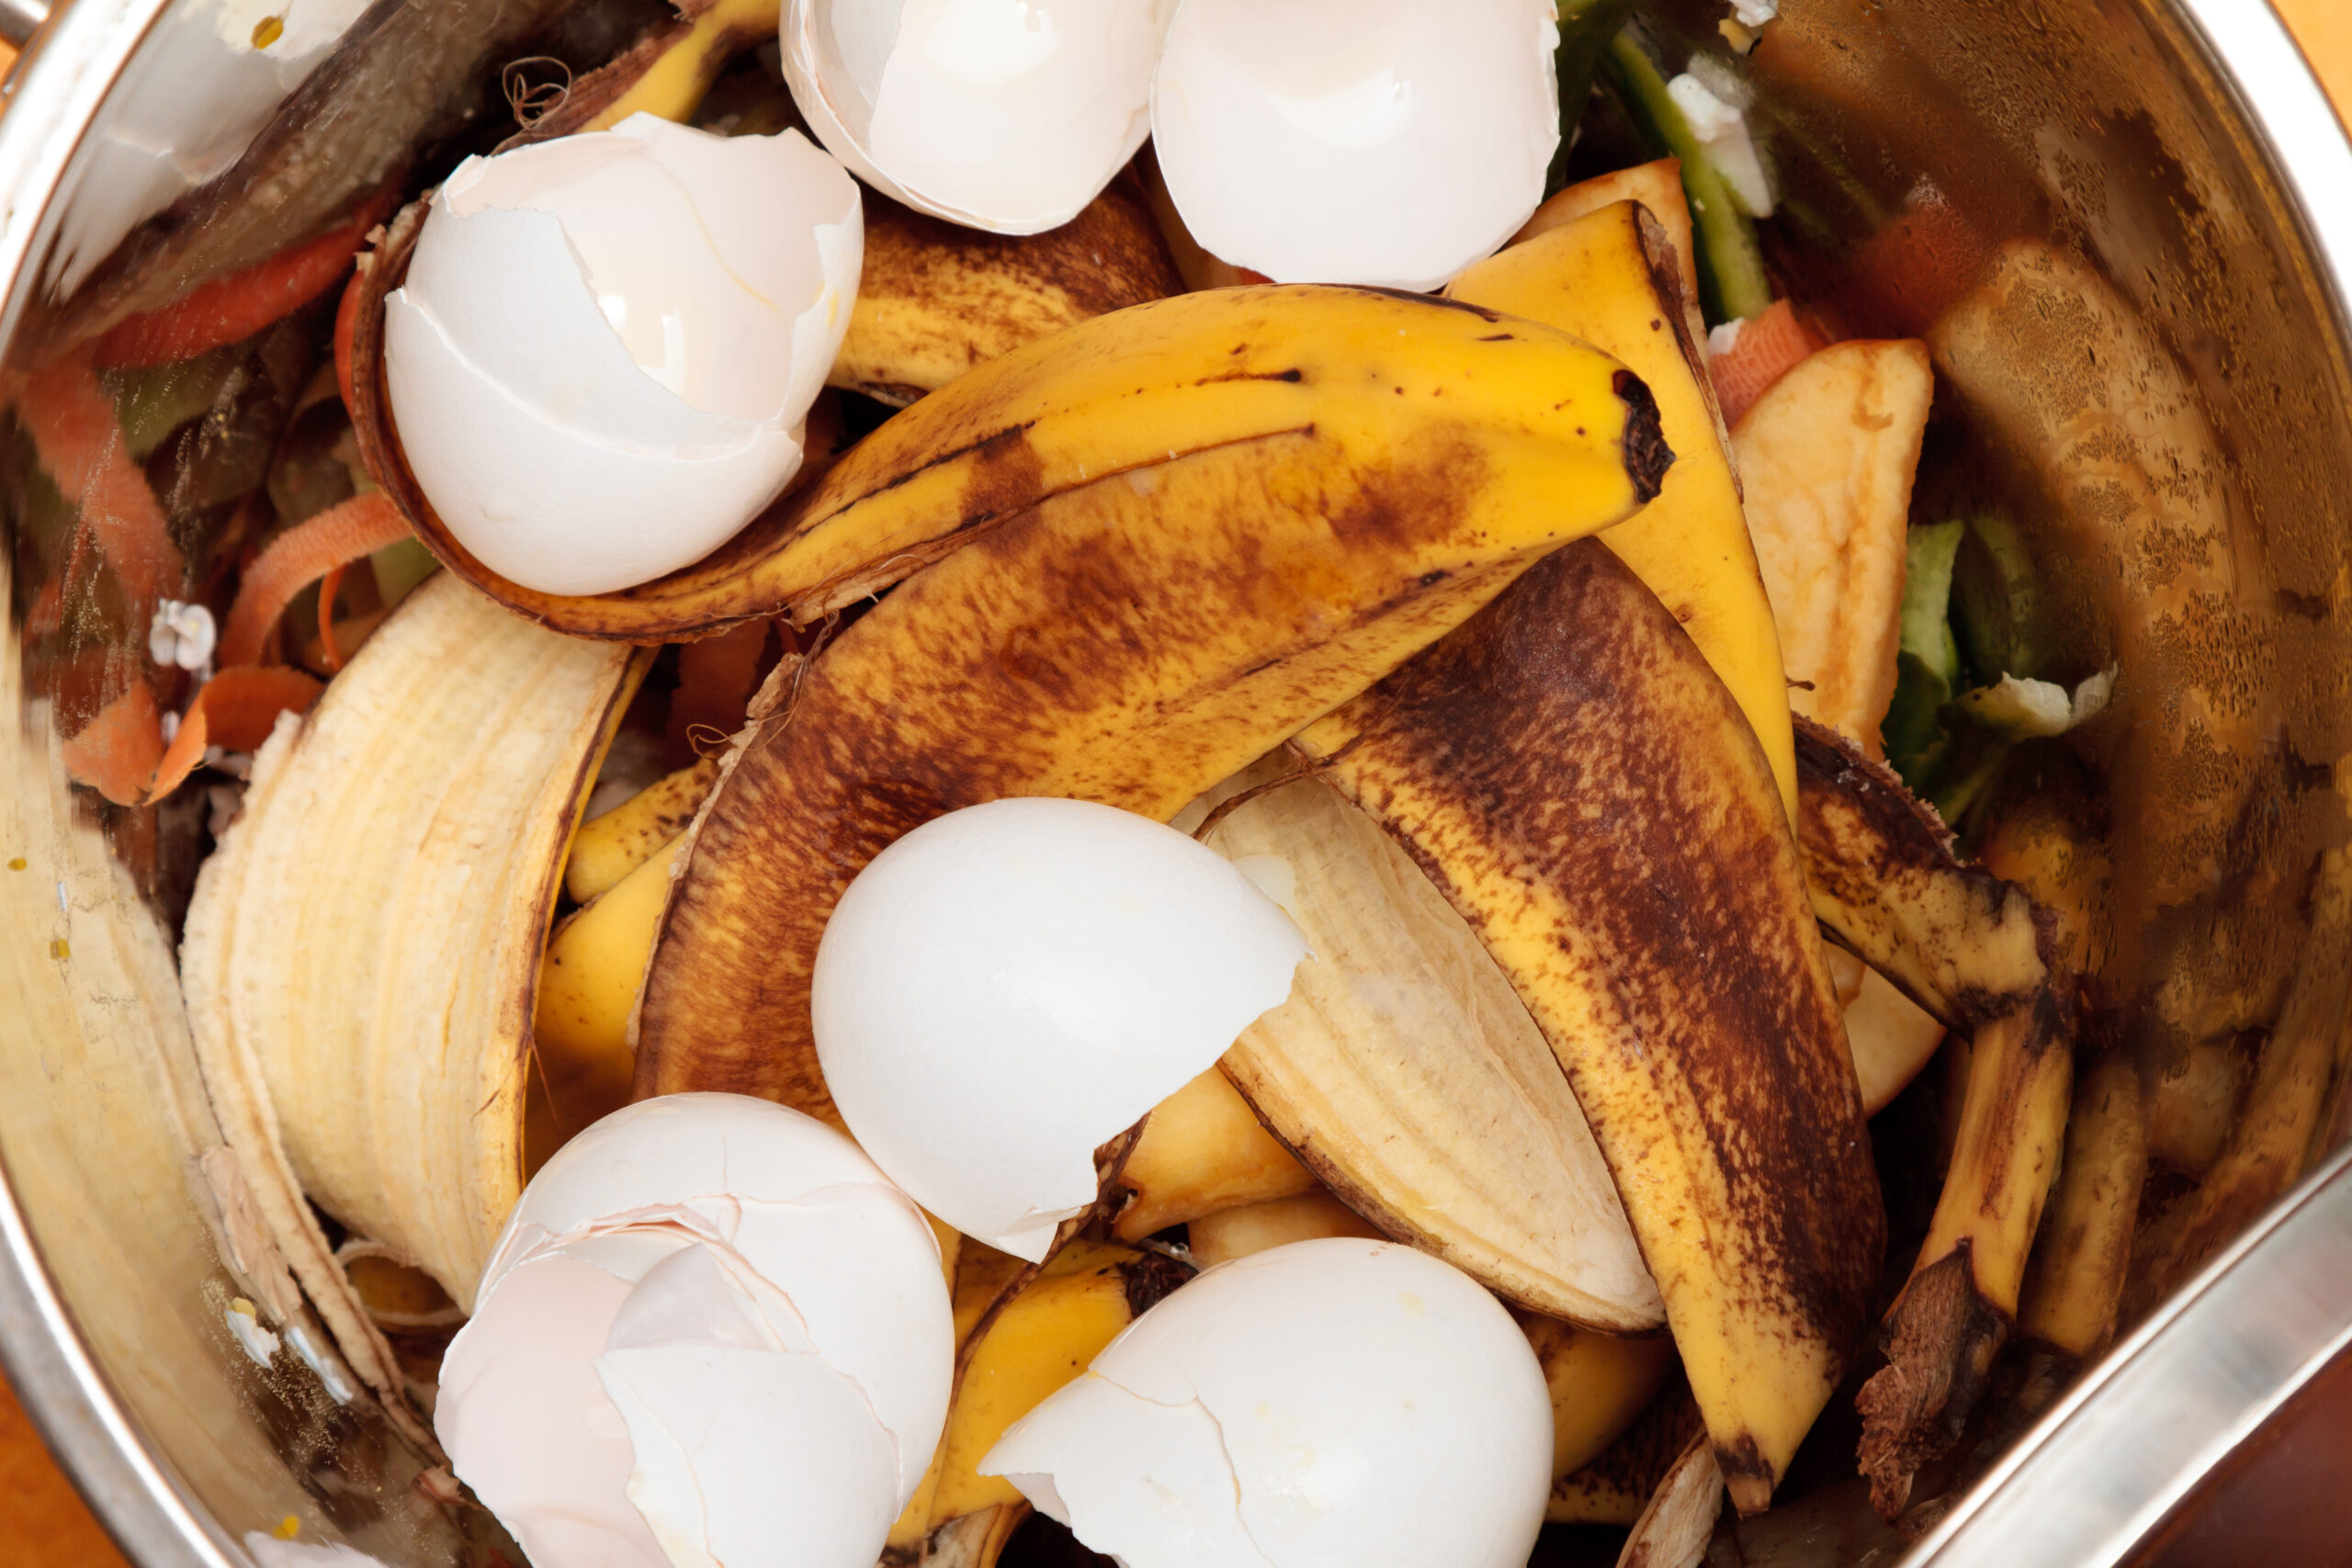 Banana peels and egg shells in compost